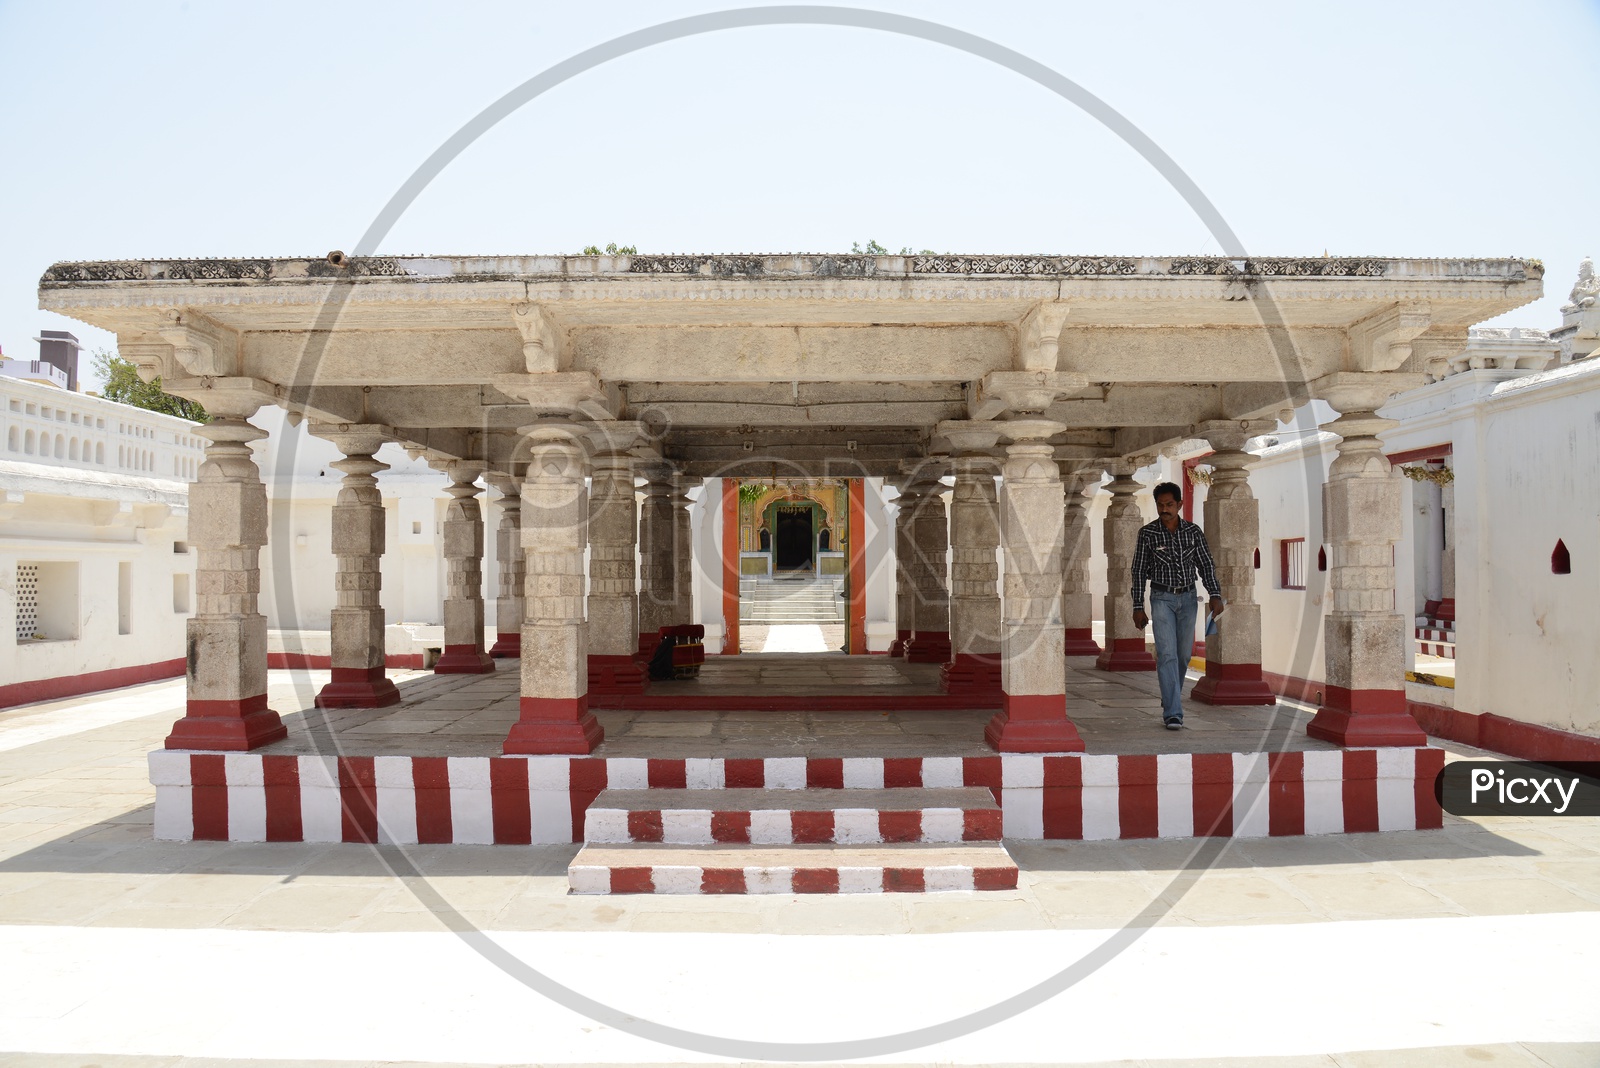 Architecture of   Sitaram Bagh Sri Ramachandra Swamy Temple in Hyderabad